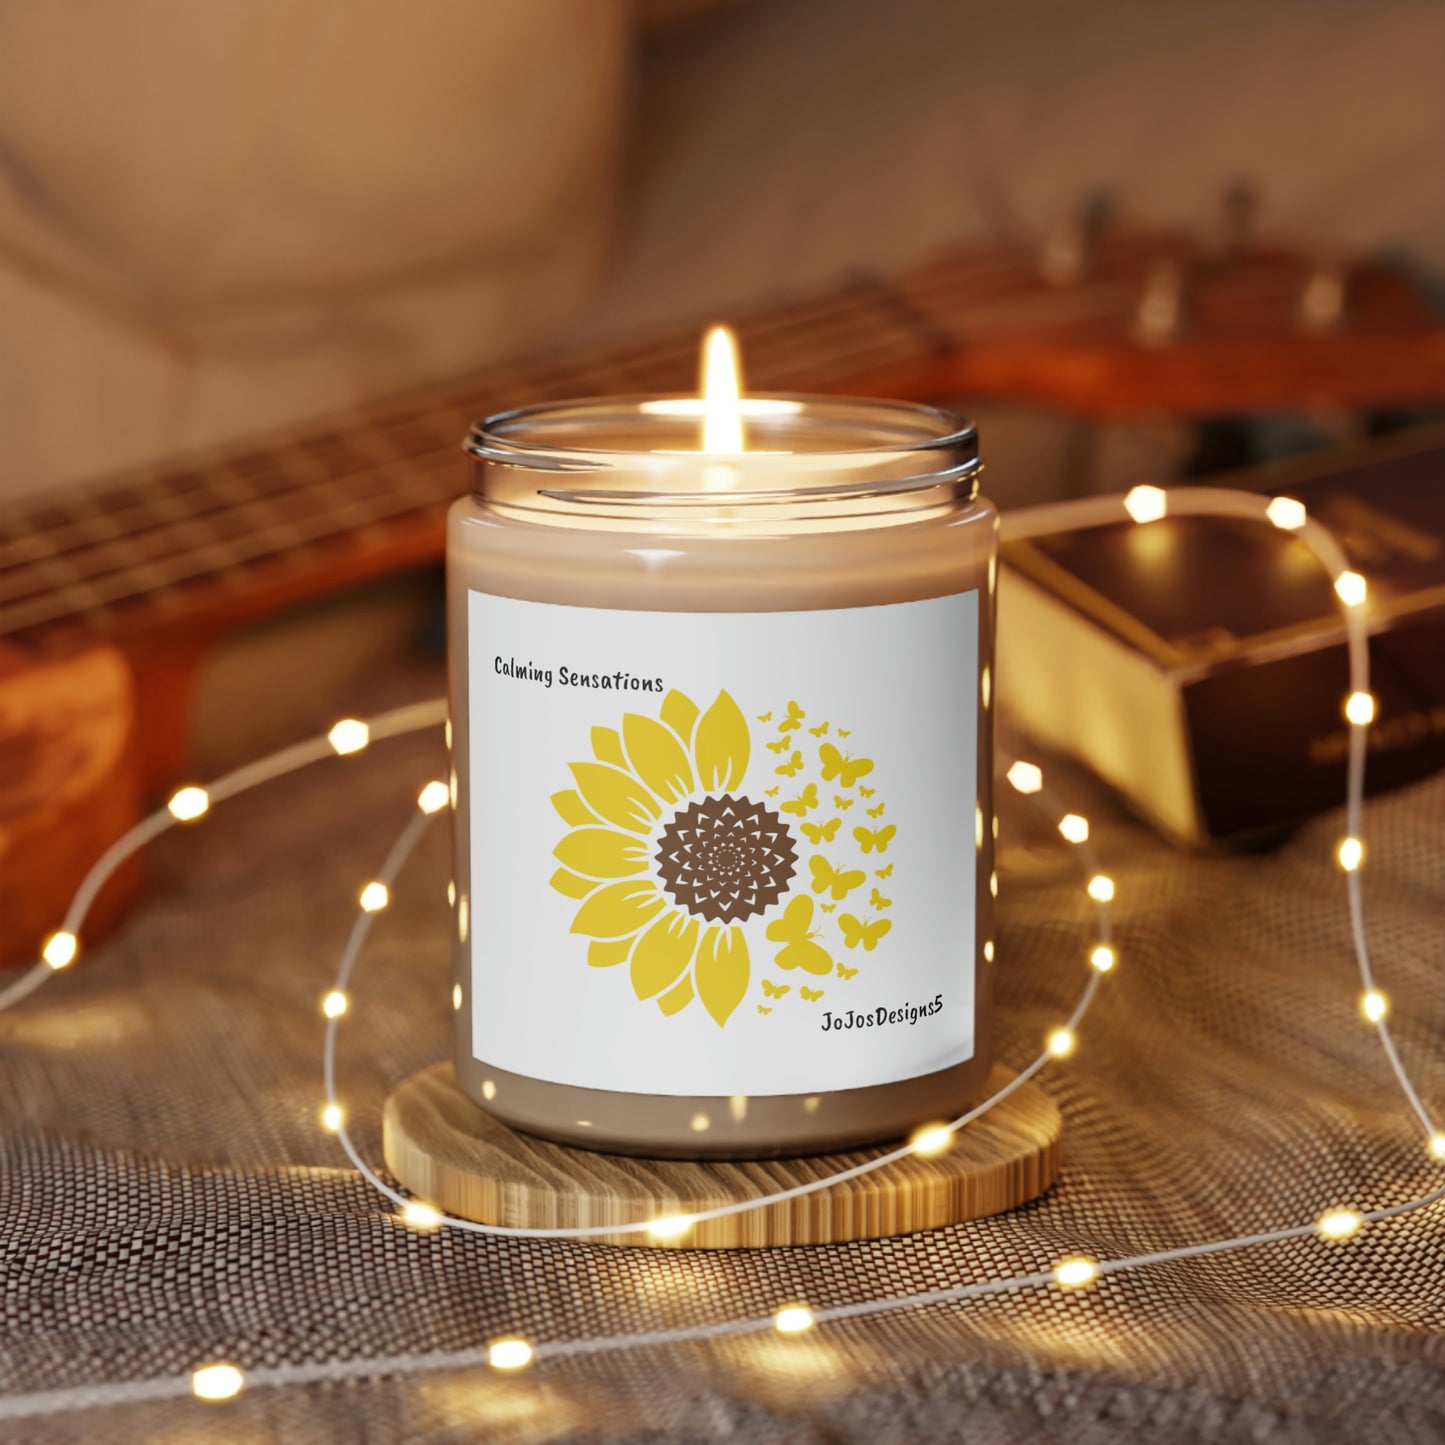 Calming Sensations Yellow Sunflower Butterflies Cinnamon or Vanilla Scented Candle, 9oz